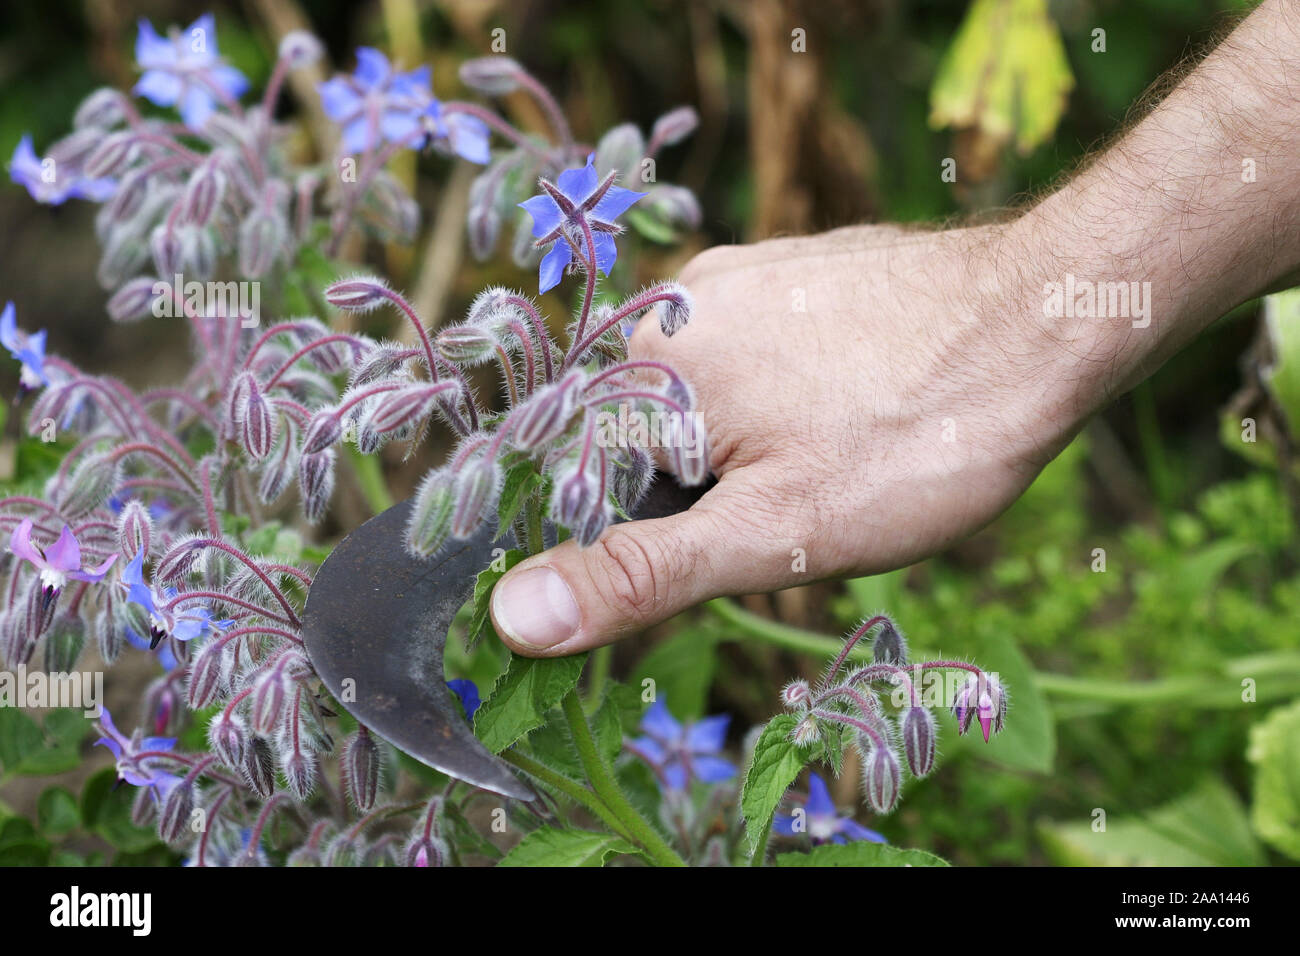 Eine Gärtnerhand schneidet Boretschblüten mit einer geschwungenen Hippe / giardinieri a mano è il taglio di fiori di borragine con un spezial giardiniere coltello Foto Stock